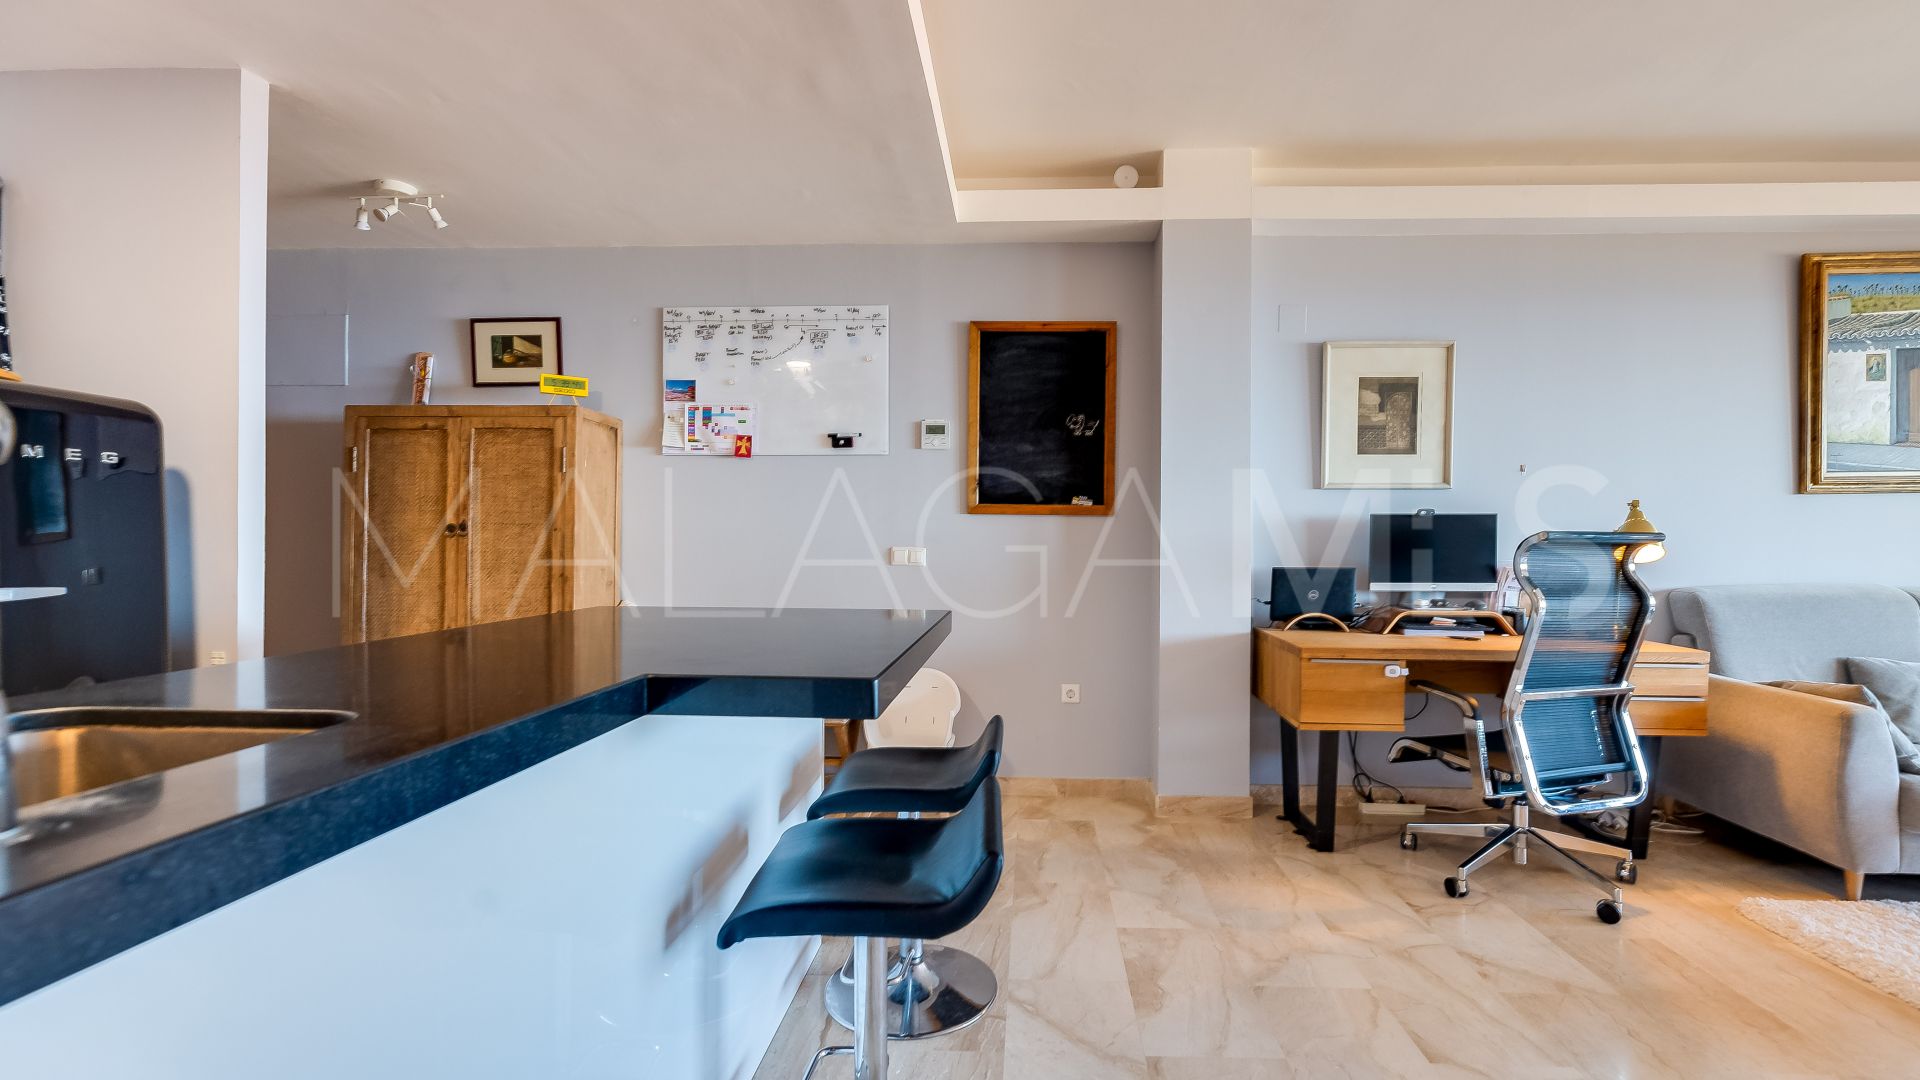 Buy Altos de Calahonda 2 bedrooms ground floor apartment